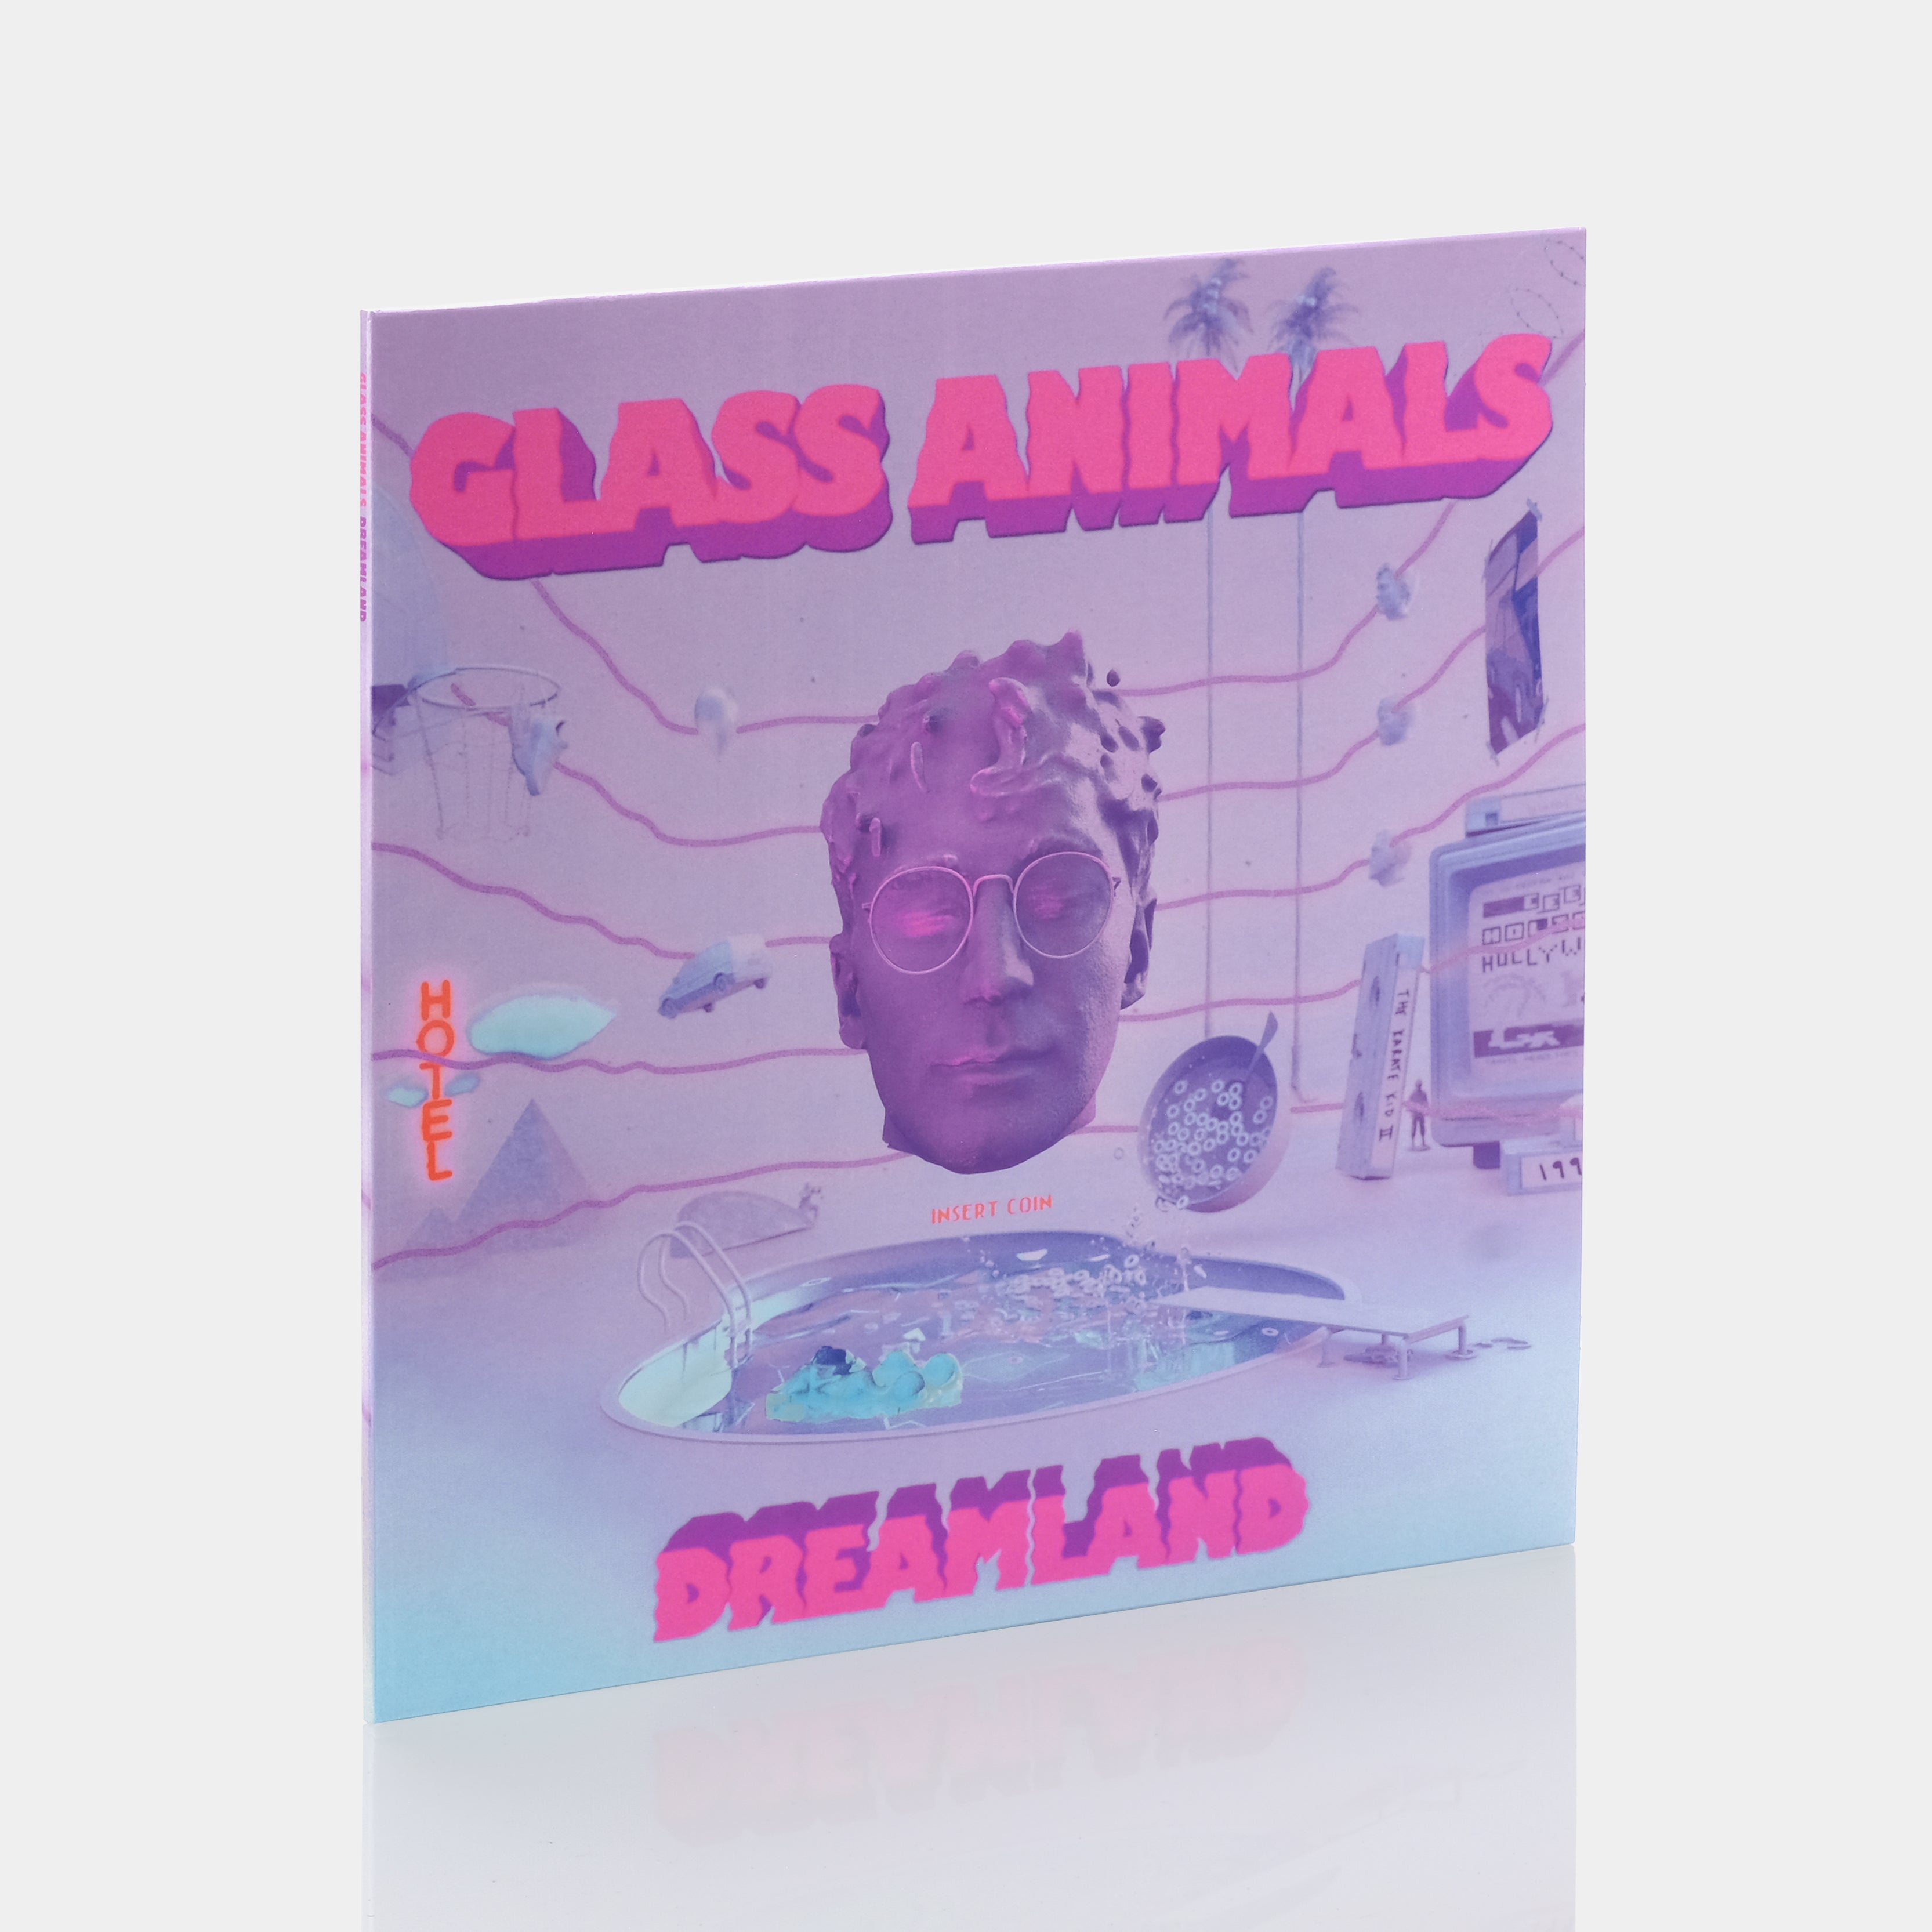 Glass Animals - Dreamland LP Glow in the Dark Vinyl Record